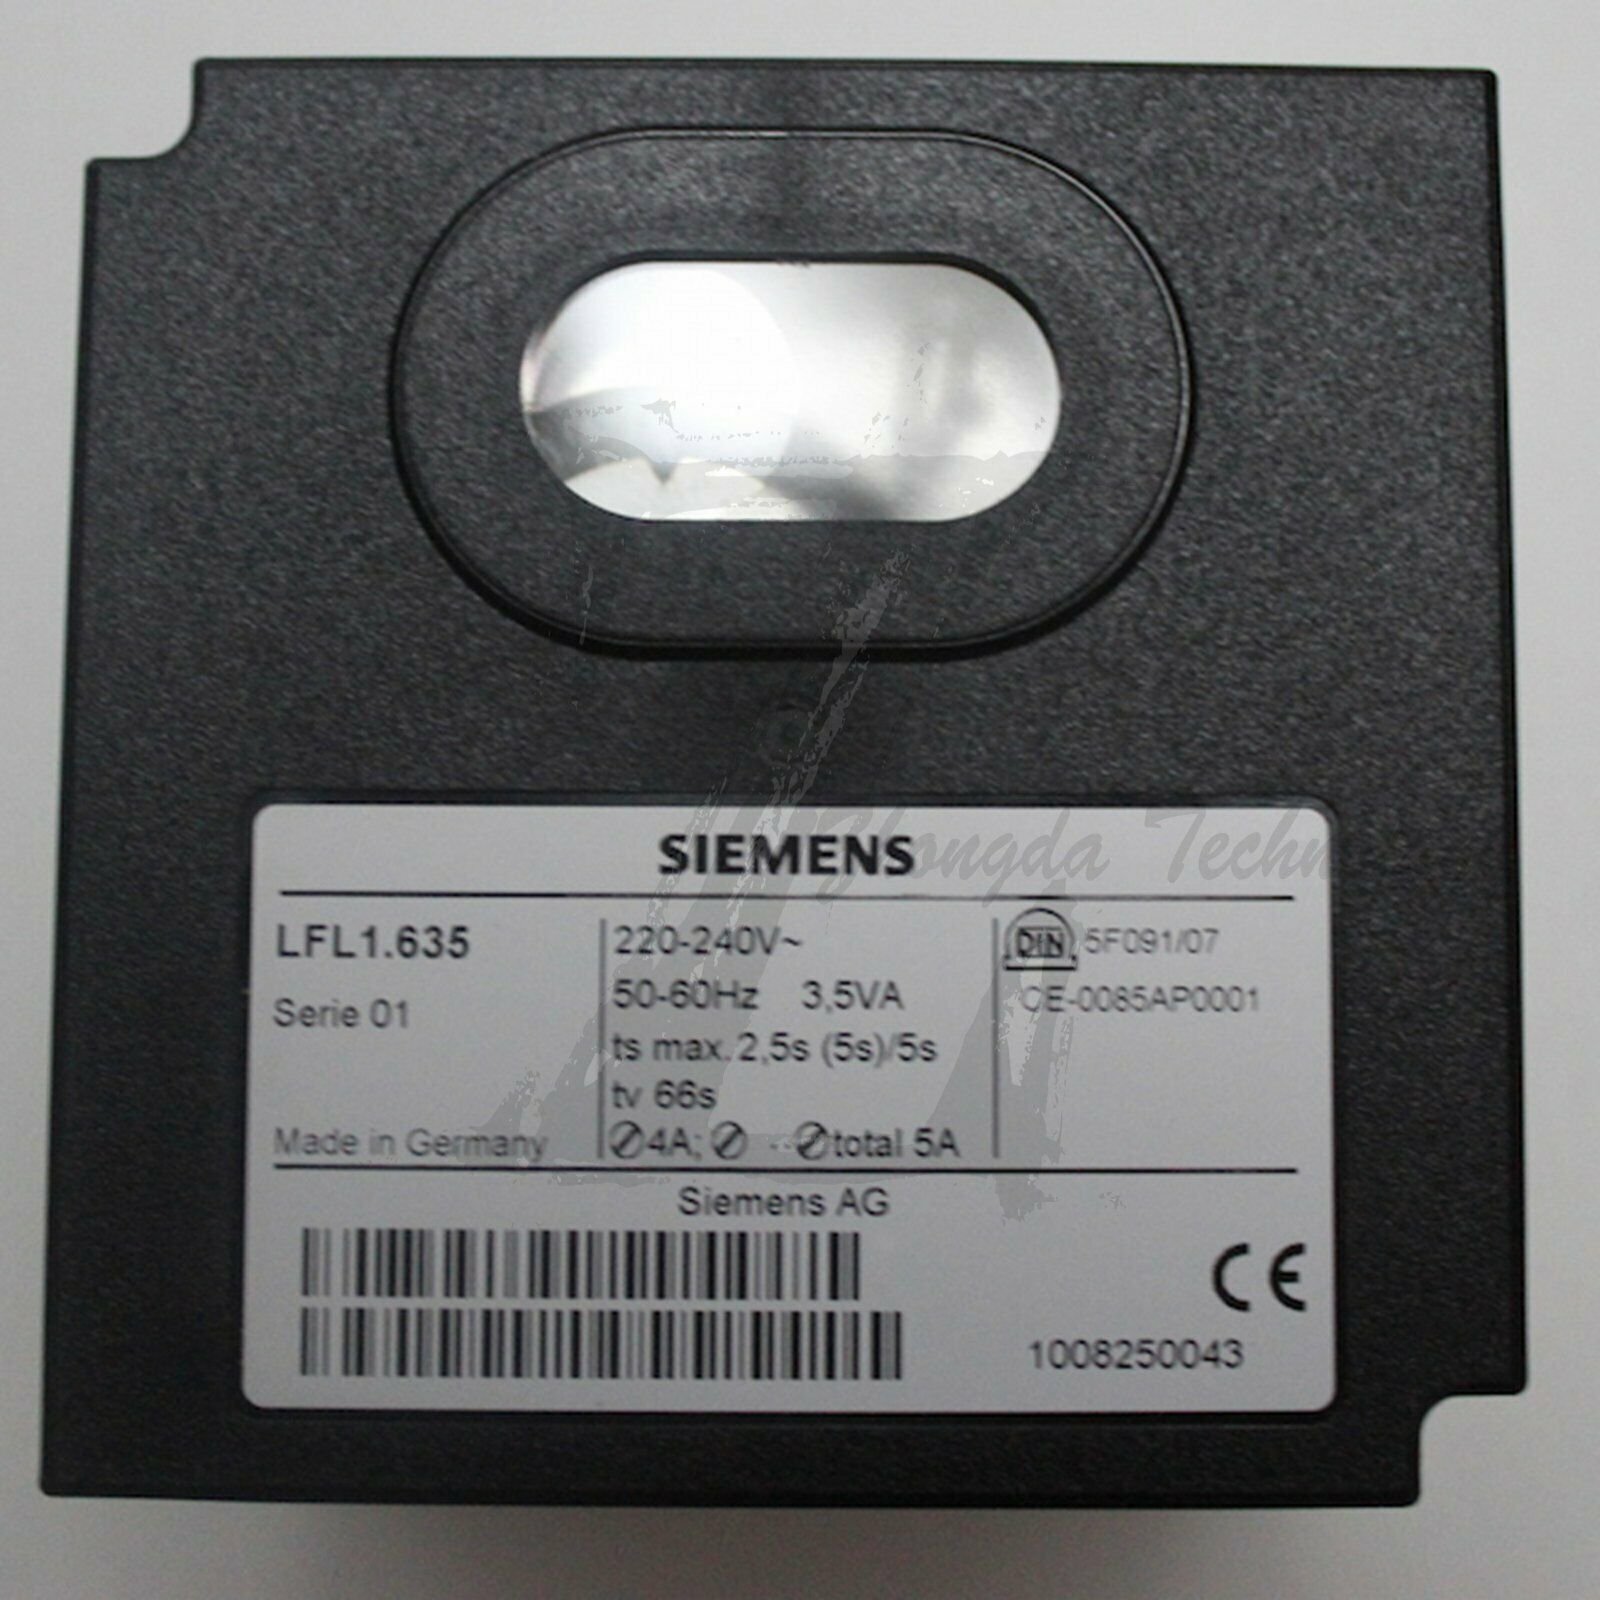 New Siemens program controller LFL1.635